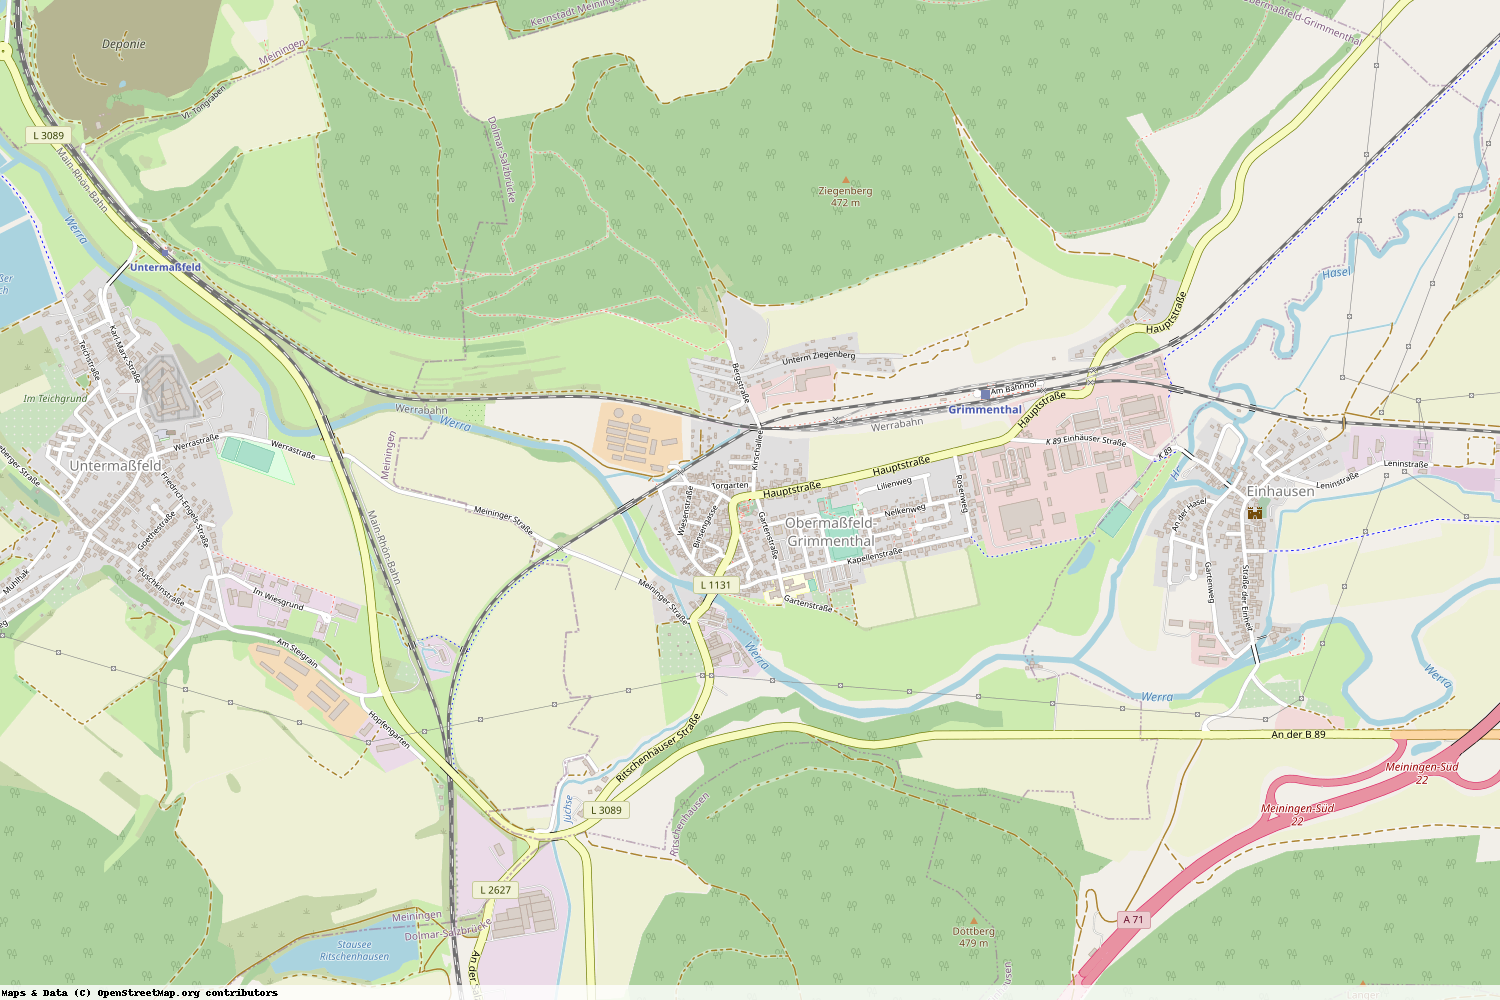 Ist gerade Stromausfall in Thüringen - Schmalkalden-Meiningen - Obermaßfeld-Grimmenthal?